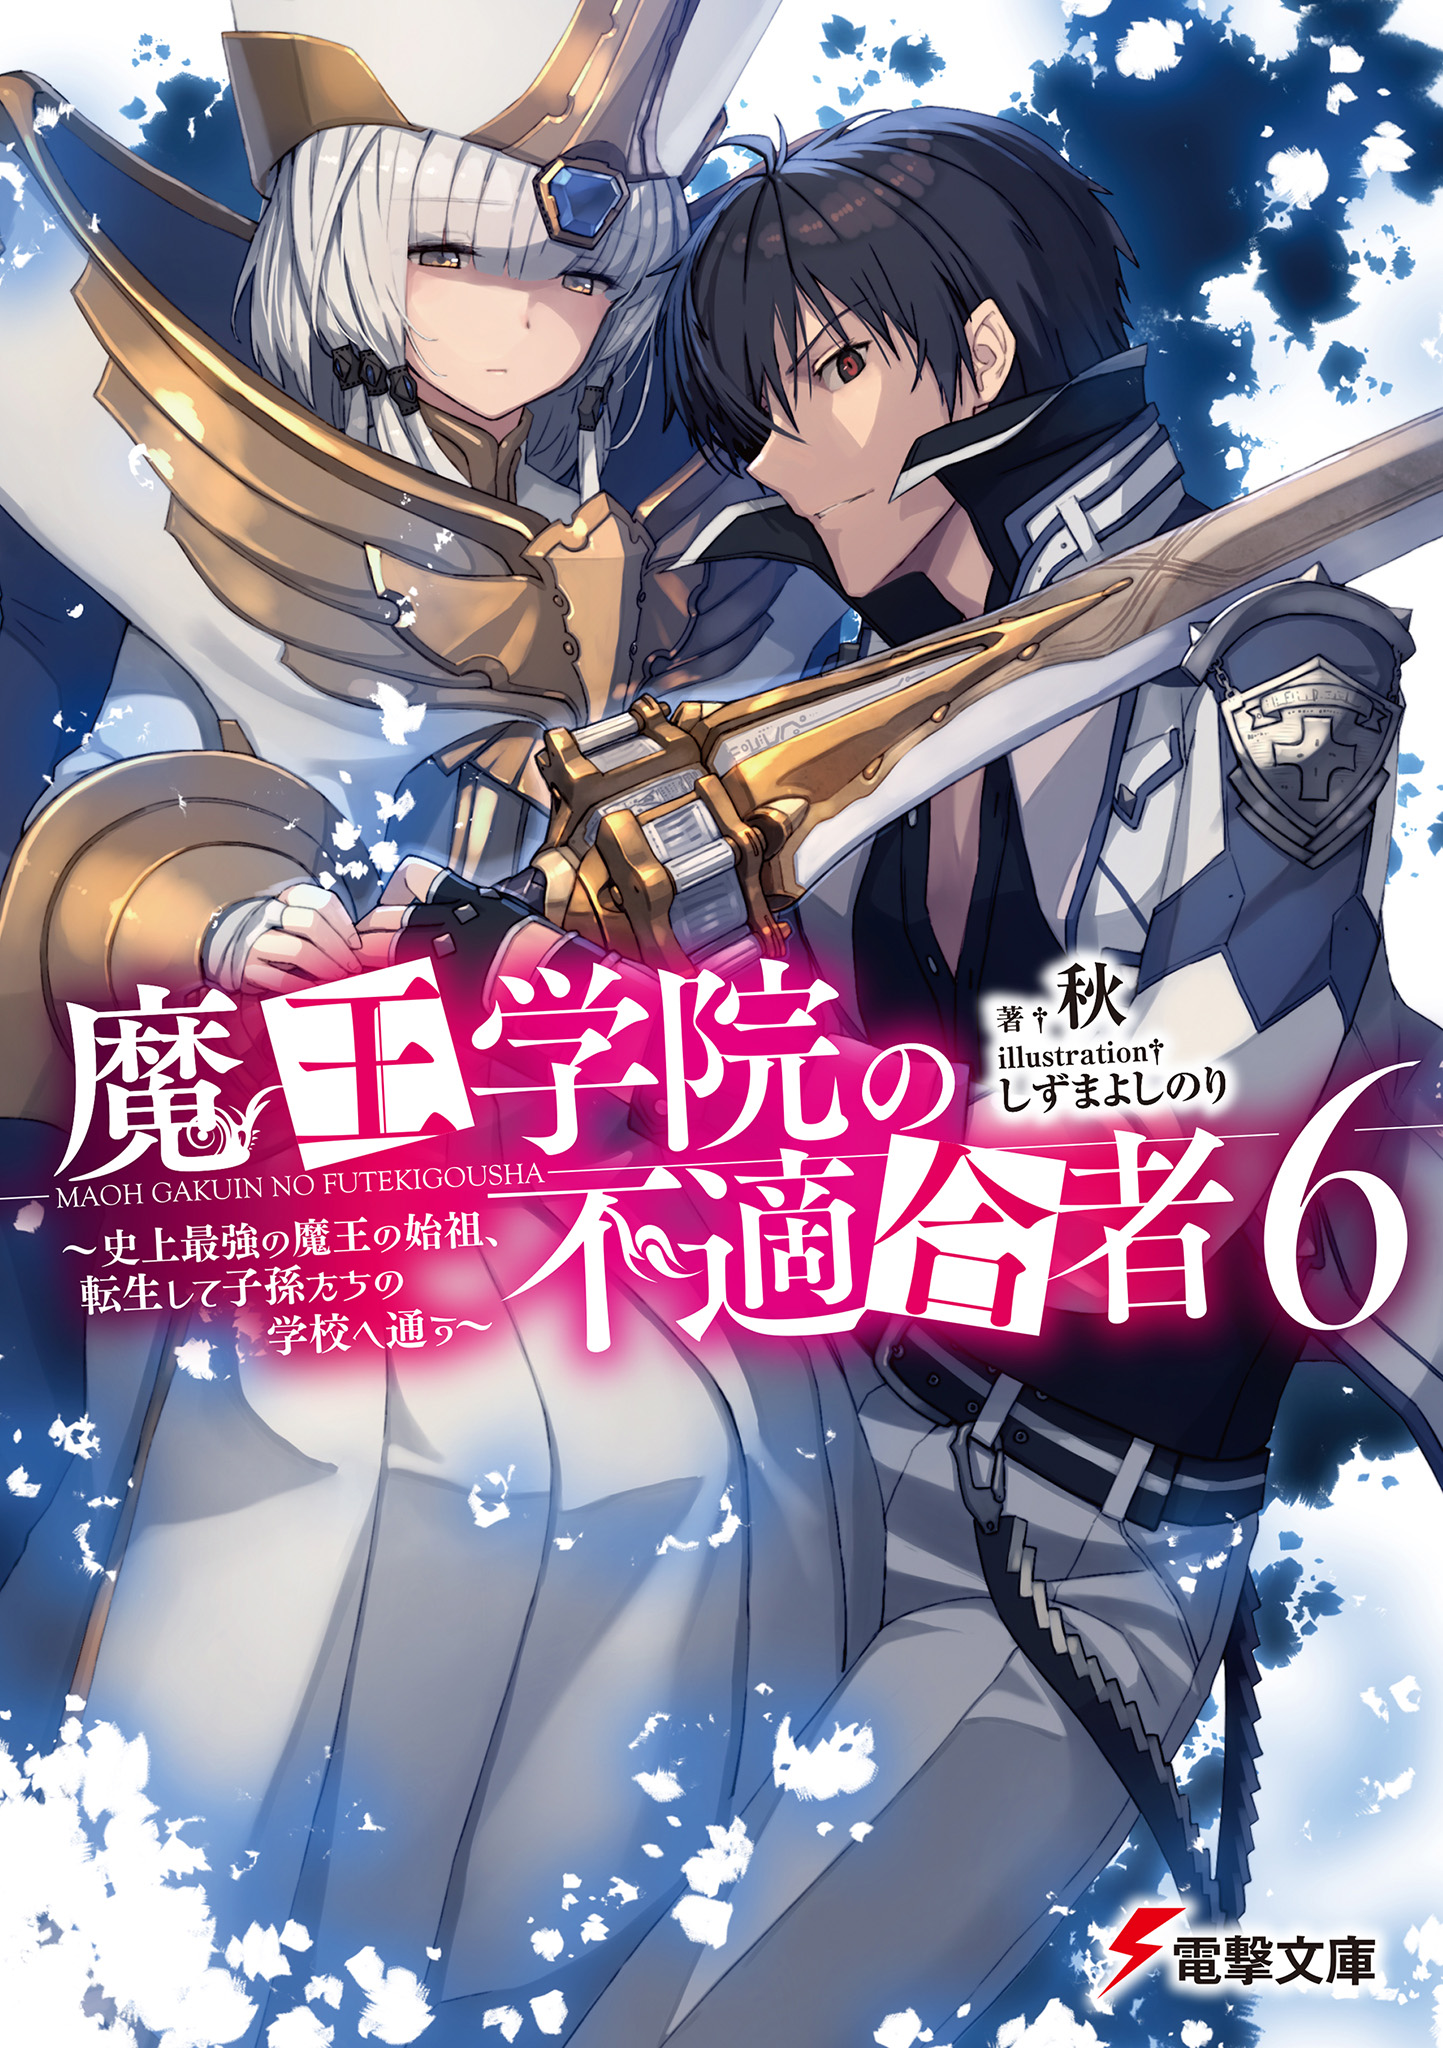 Light Novel, Maou Gakuin Wiki